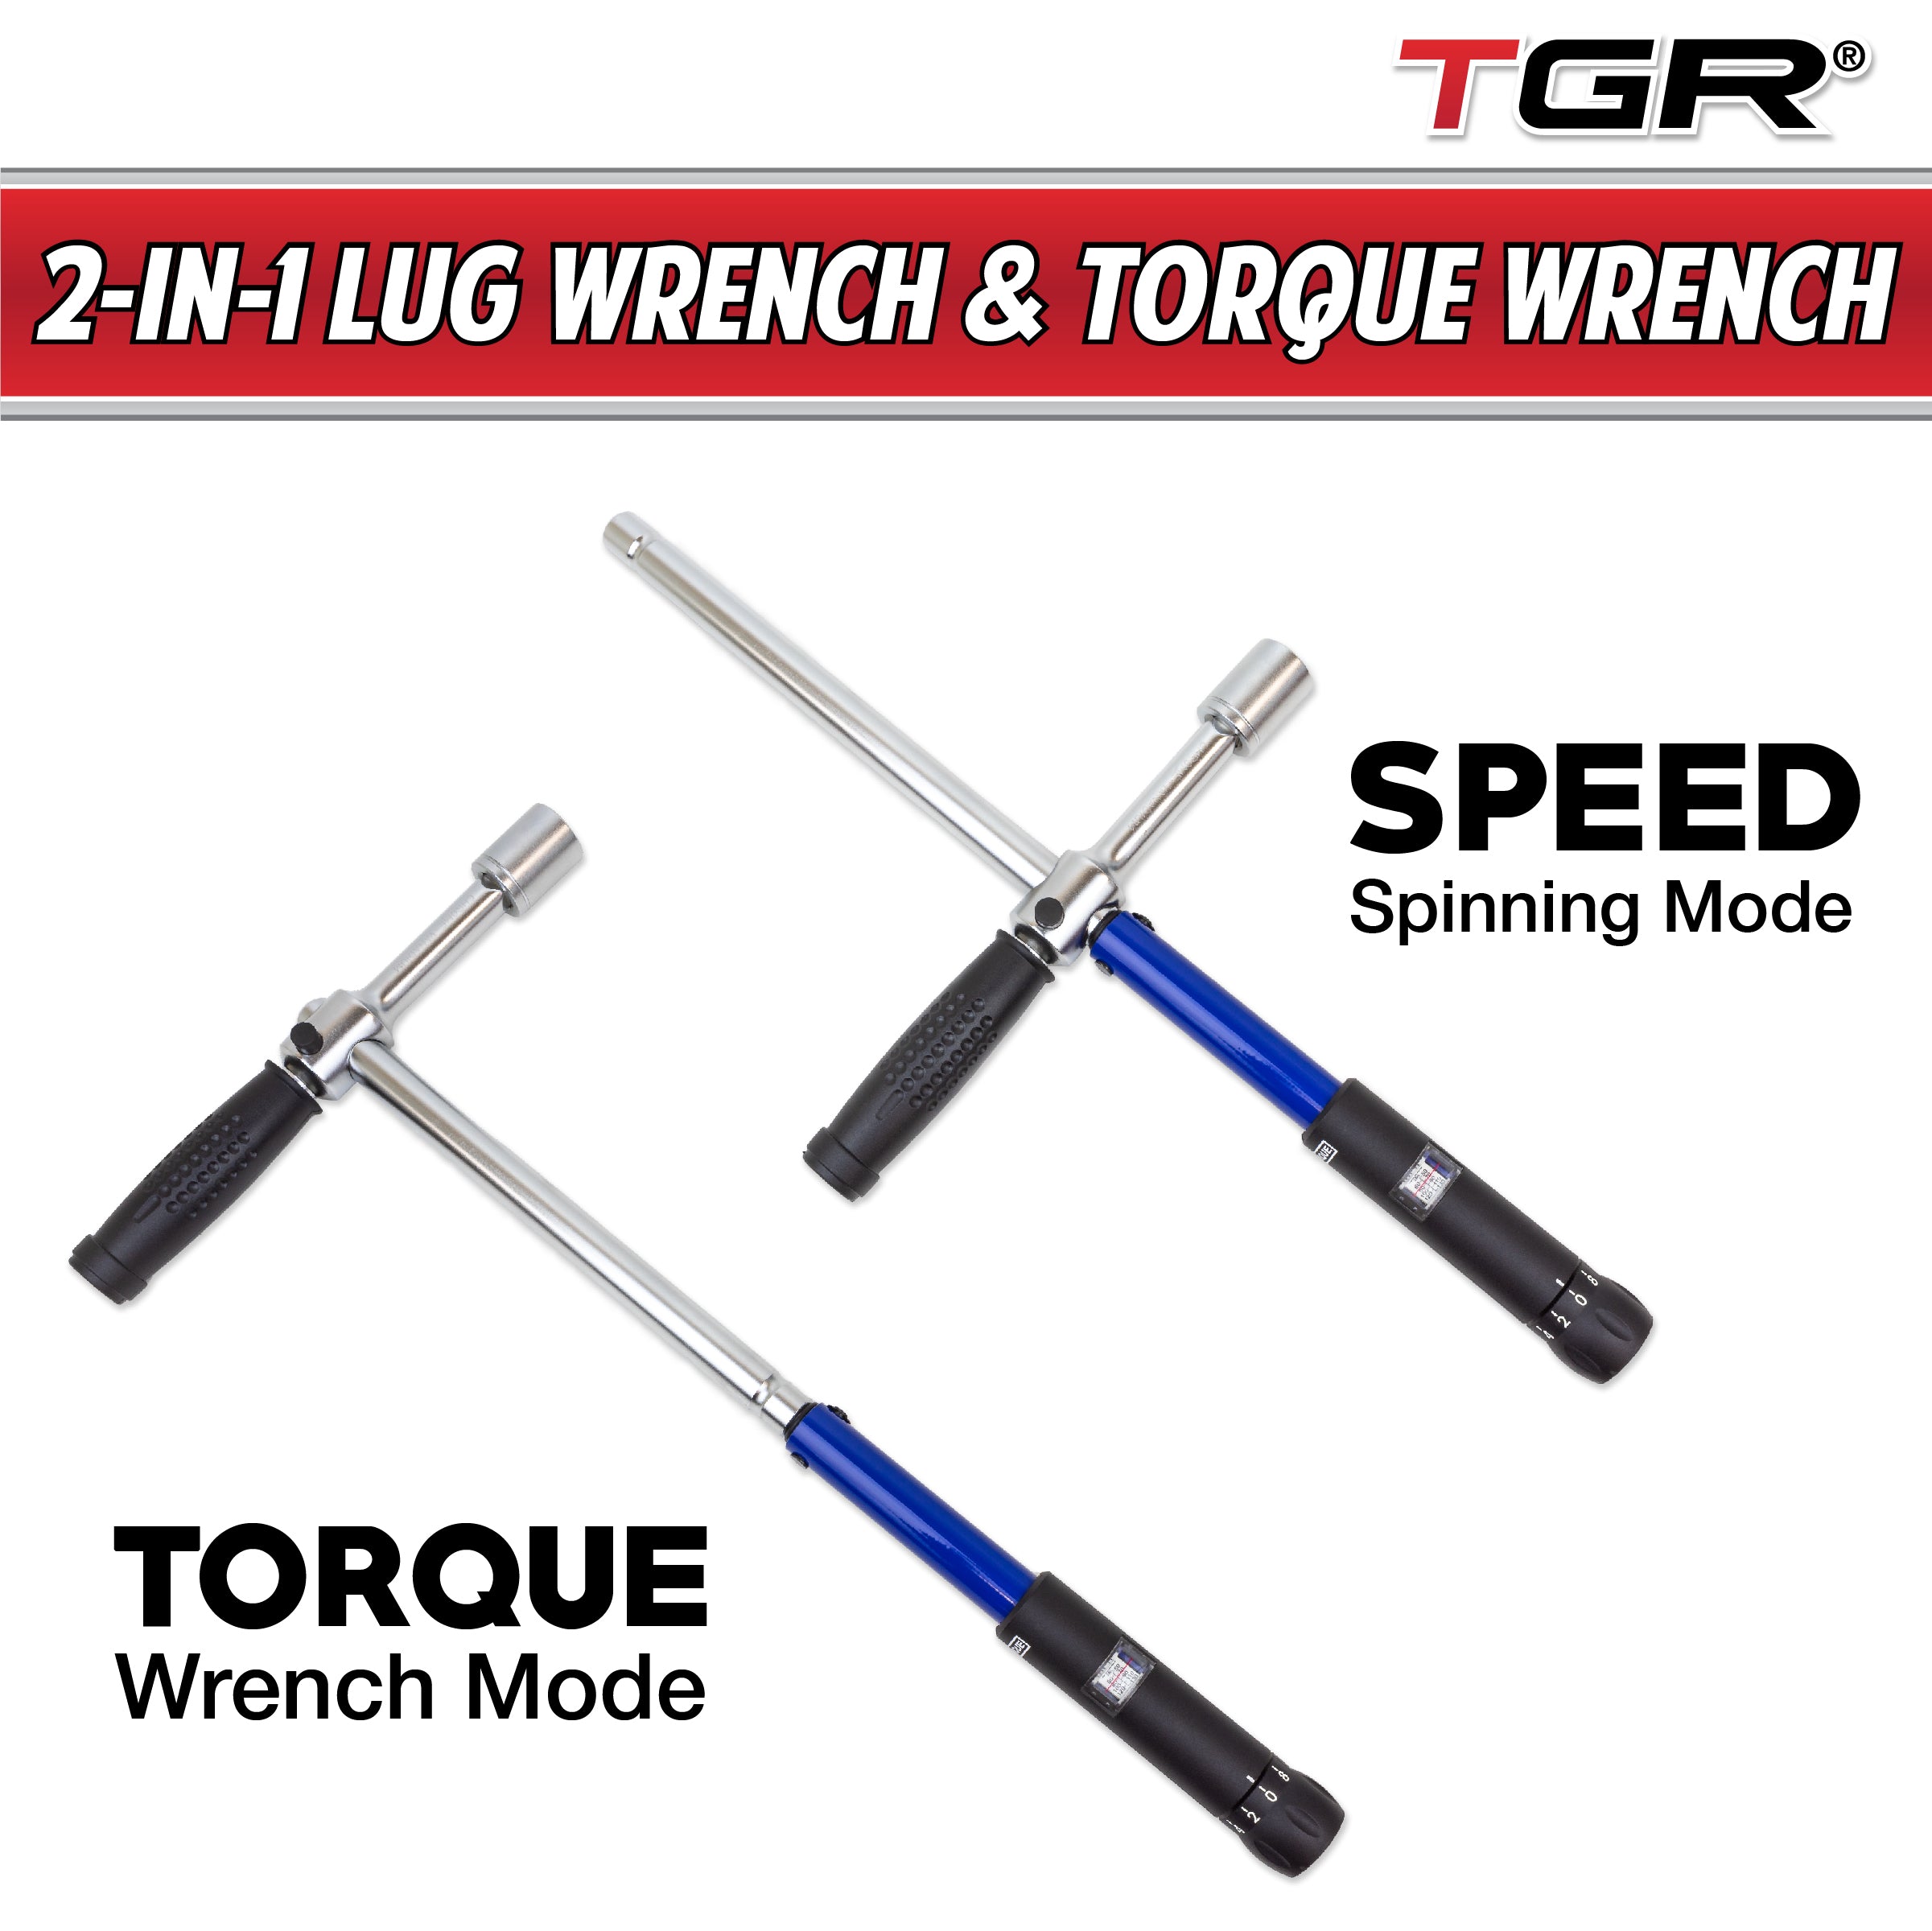 TGR 1/2” Dr Cross Type Lug Nut Torque Wrench 70-170 NM Micro-Adjustment (17, 19, 21 mm Sockets) - Tool Guy Republic